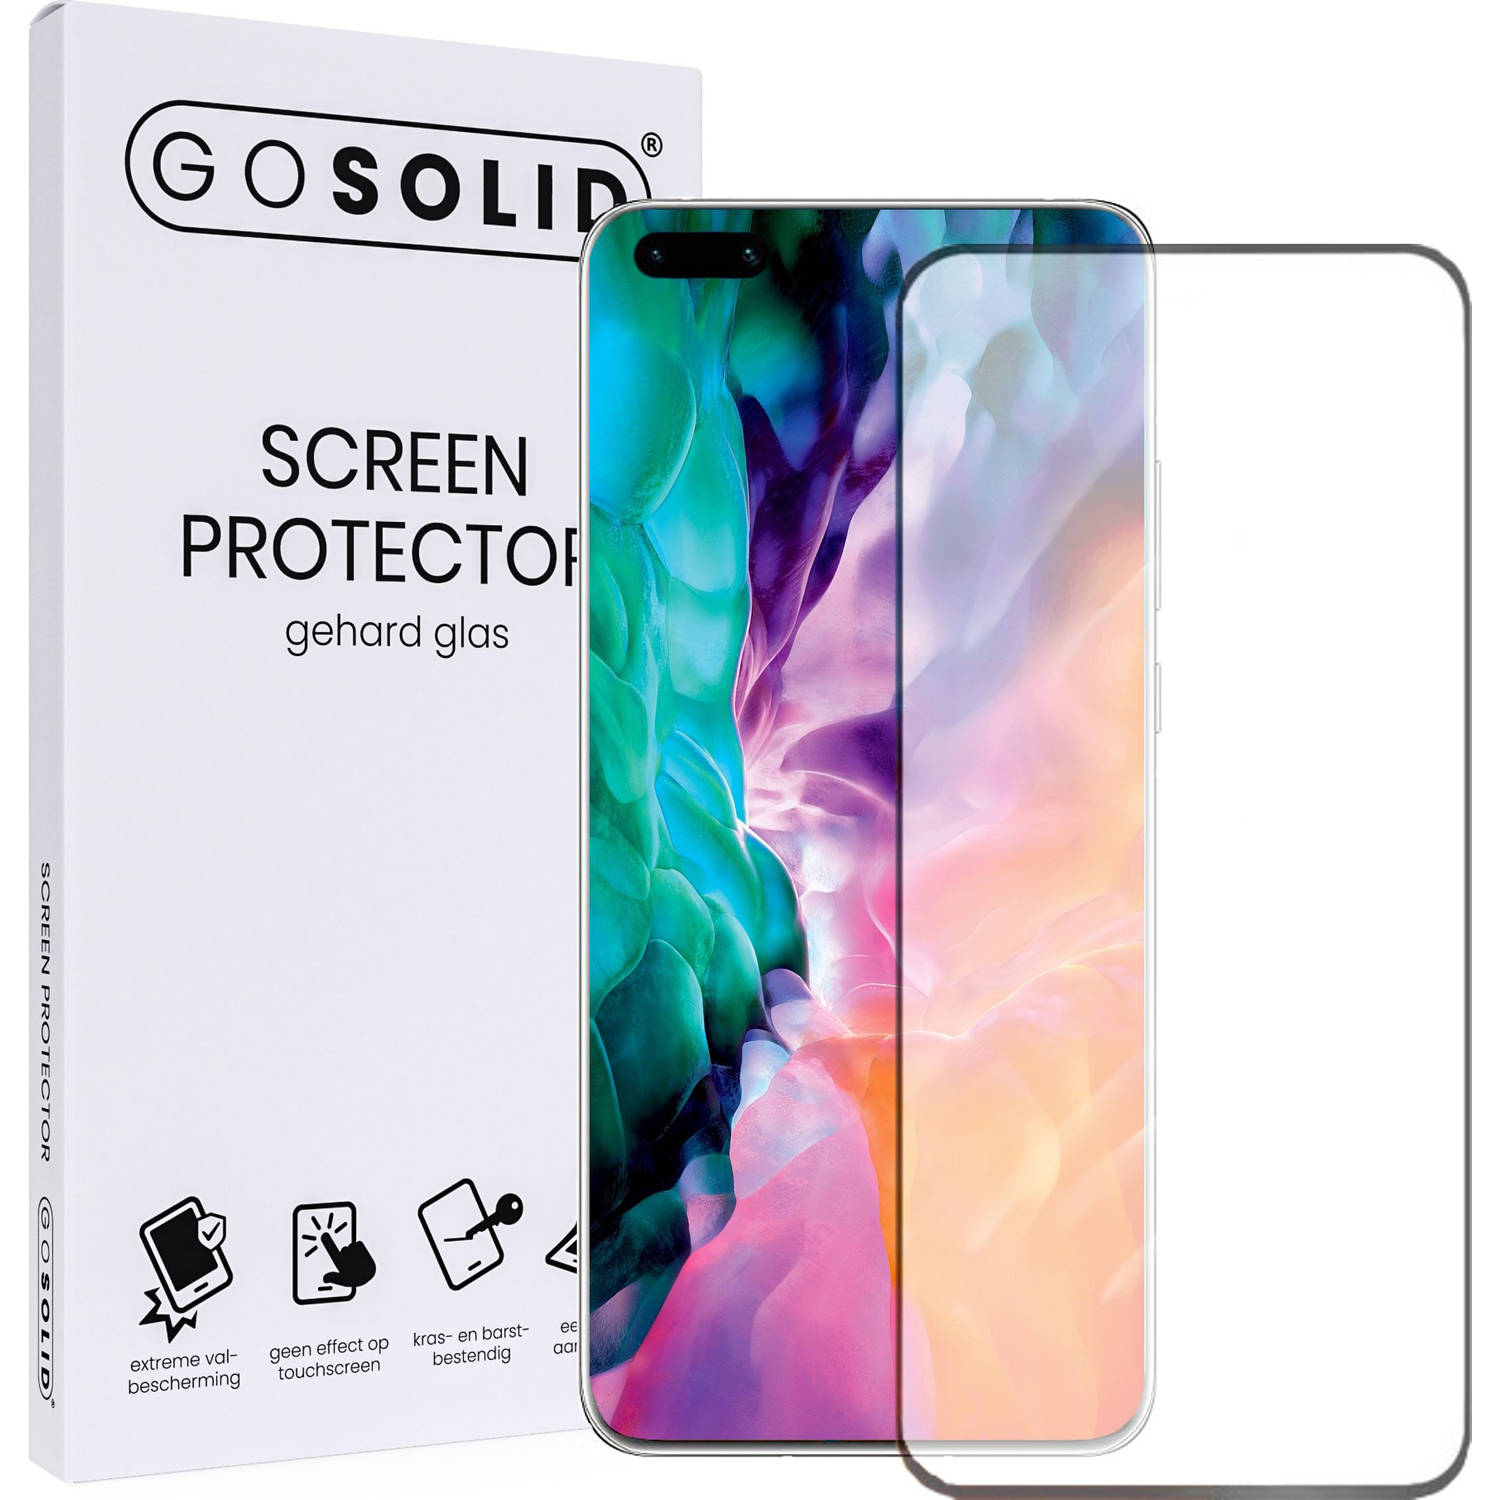 Go Solid! Huawei P40 Screenprotector Gehard Glas